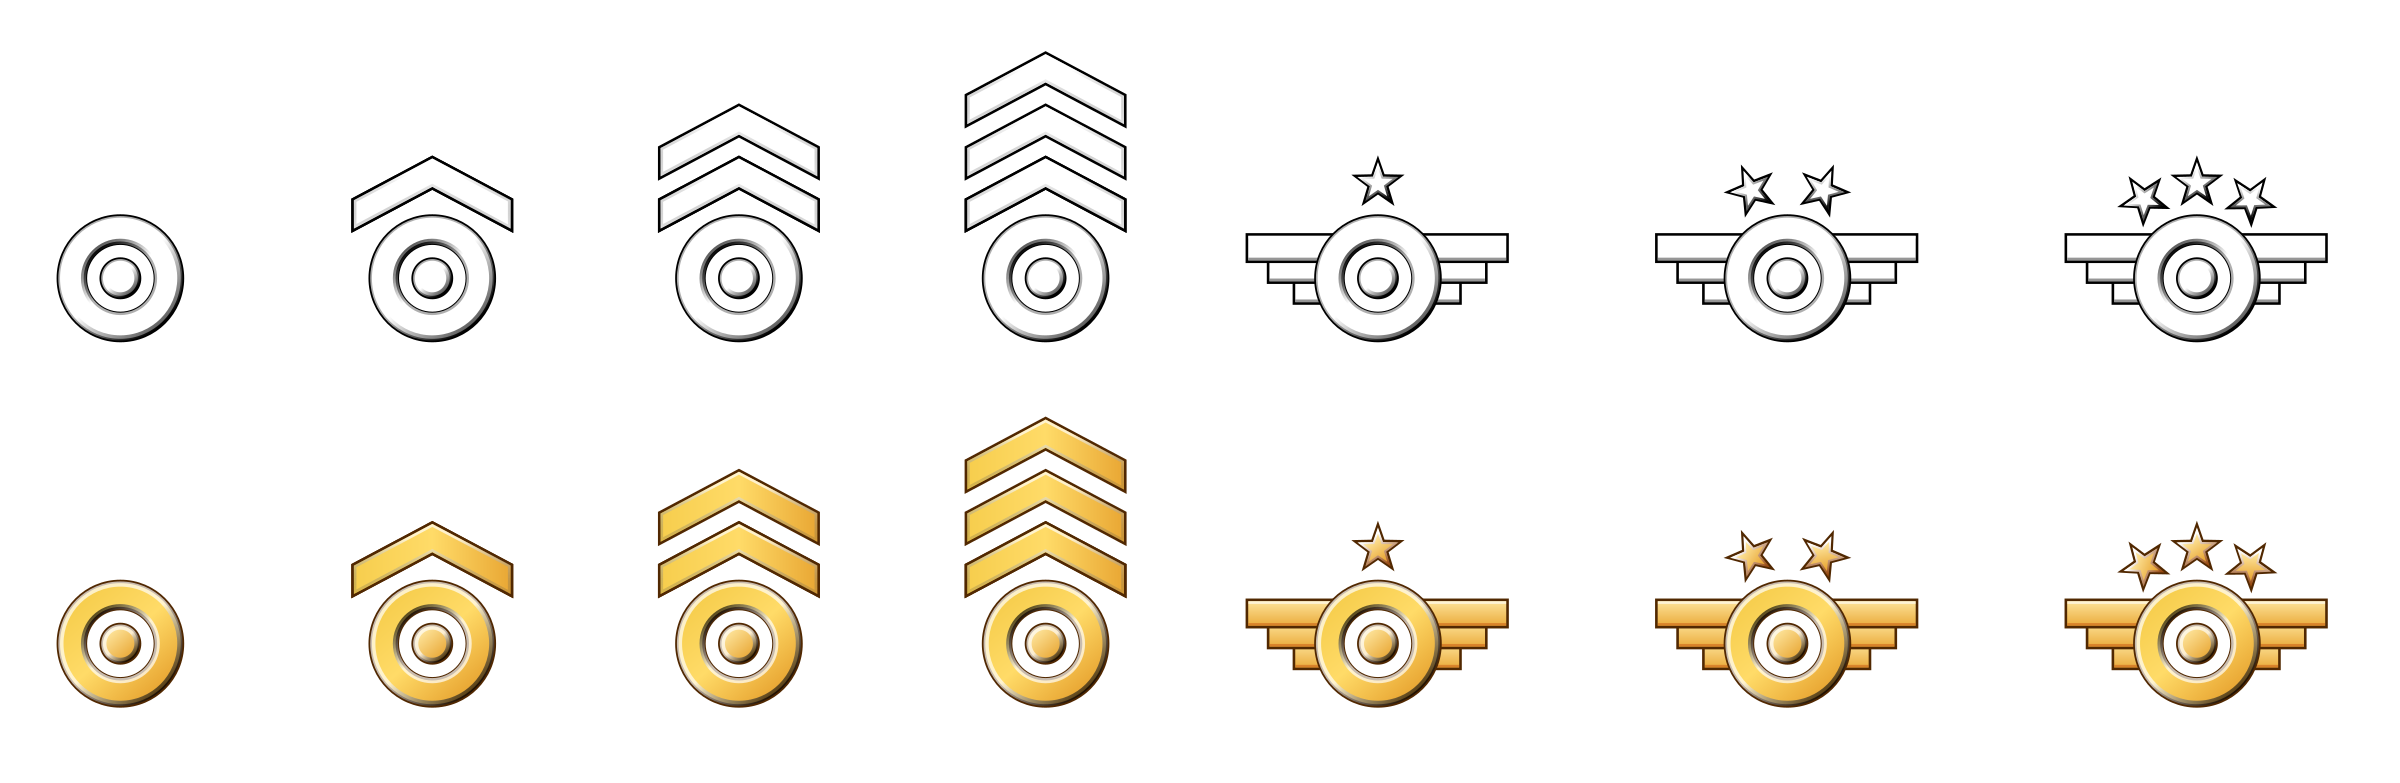 Military Badges SVG Clip arts